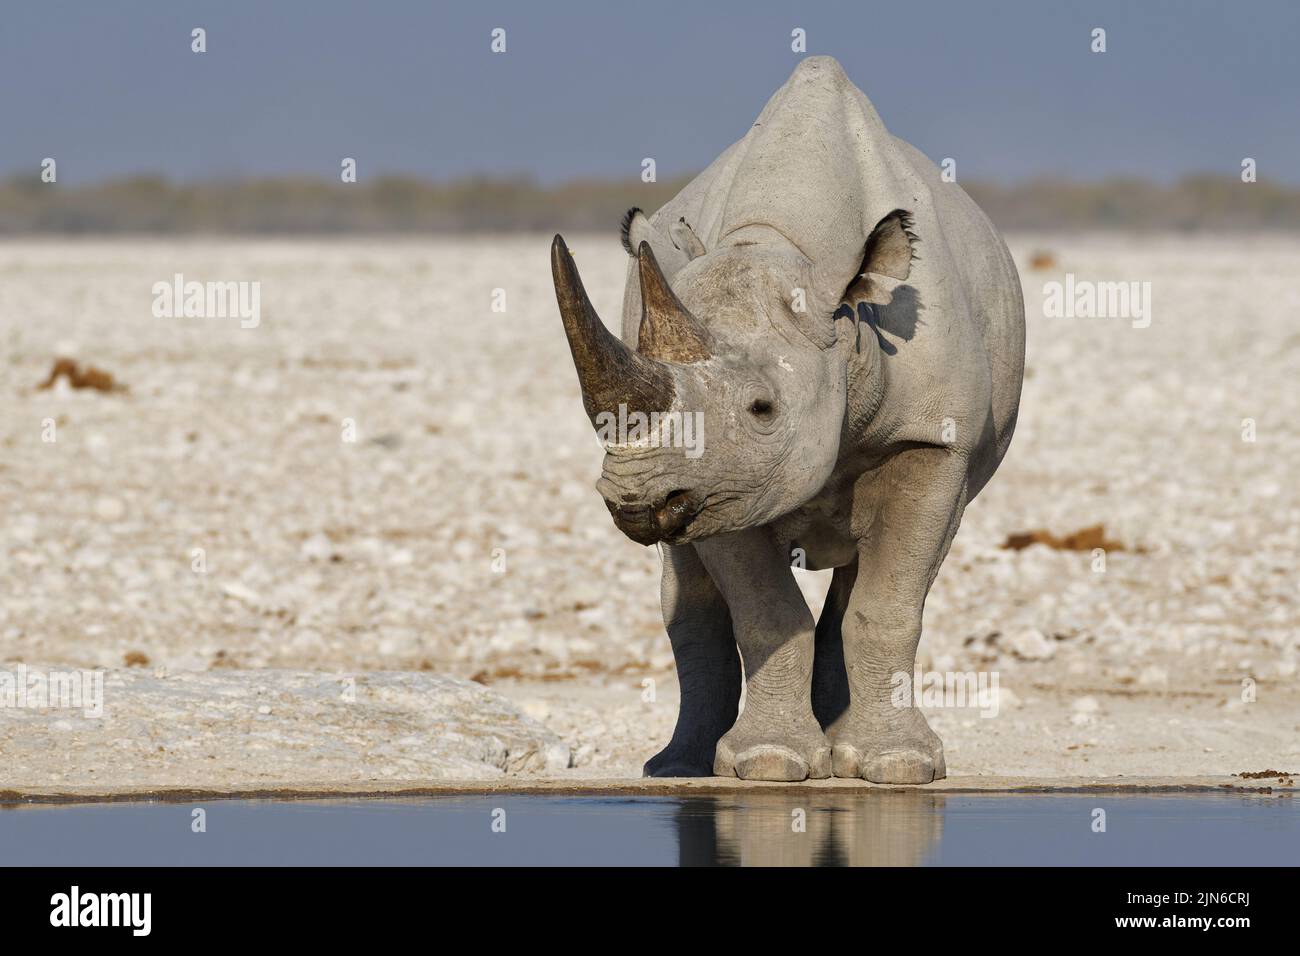 Black rhinoceros (Diceros bicornis), adult standing at waterhole, animal portrait, Etosha National Park, Namibia, Africa Stock Photo